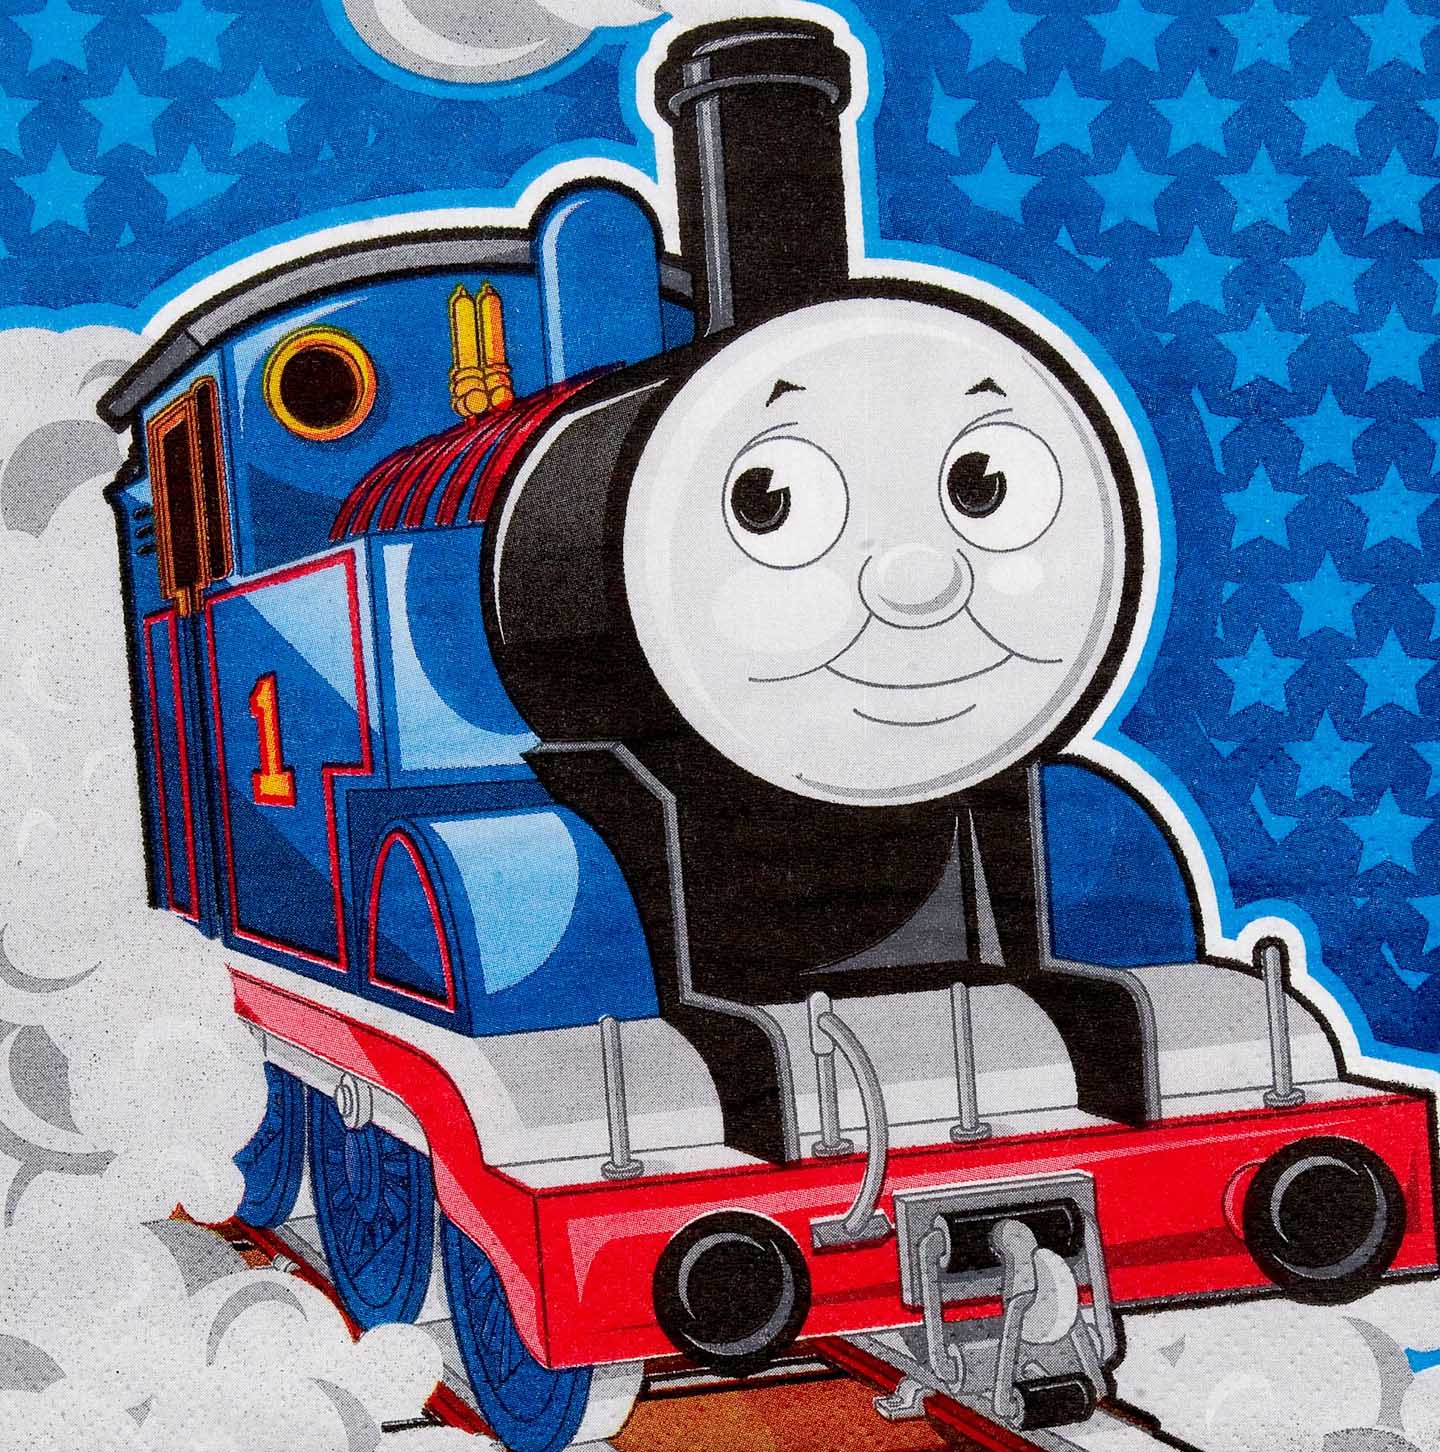 Thomas The Train Wallpaper. (39++ Wallpaper)